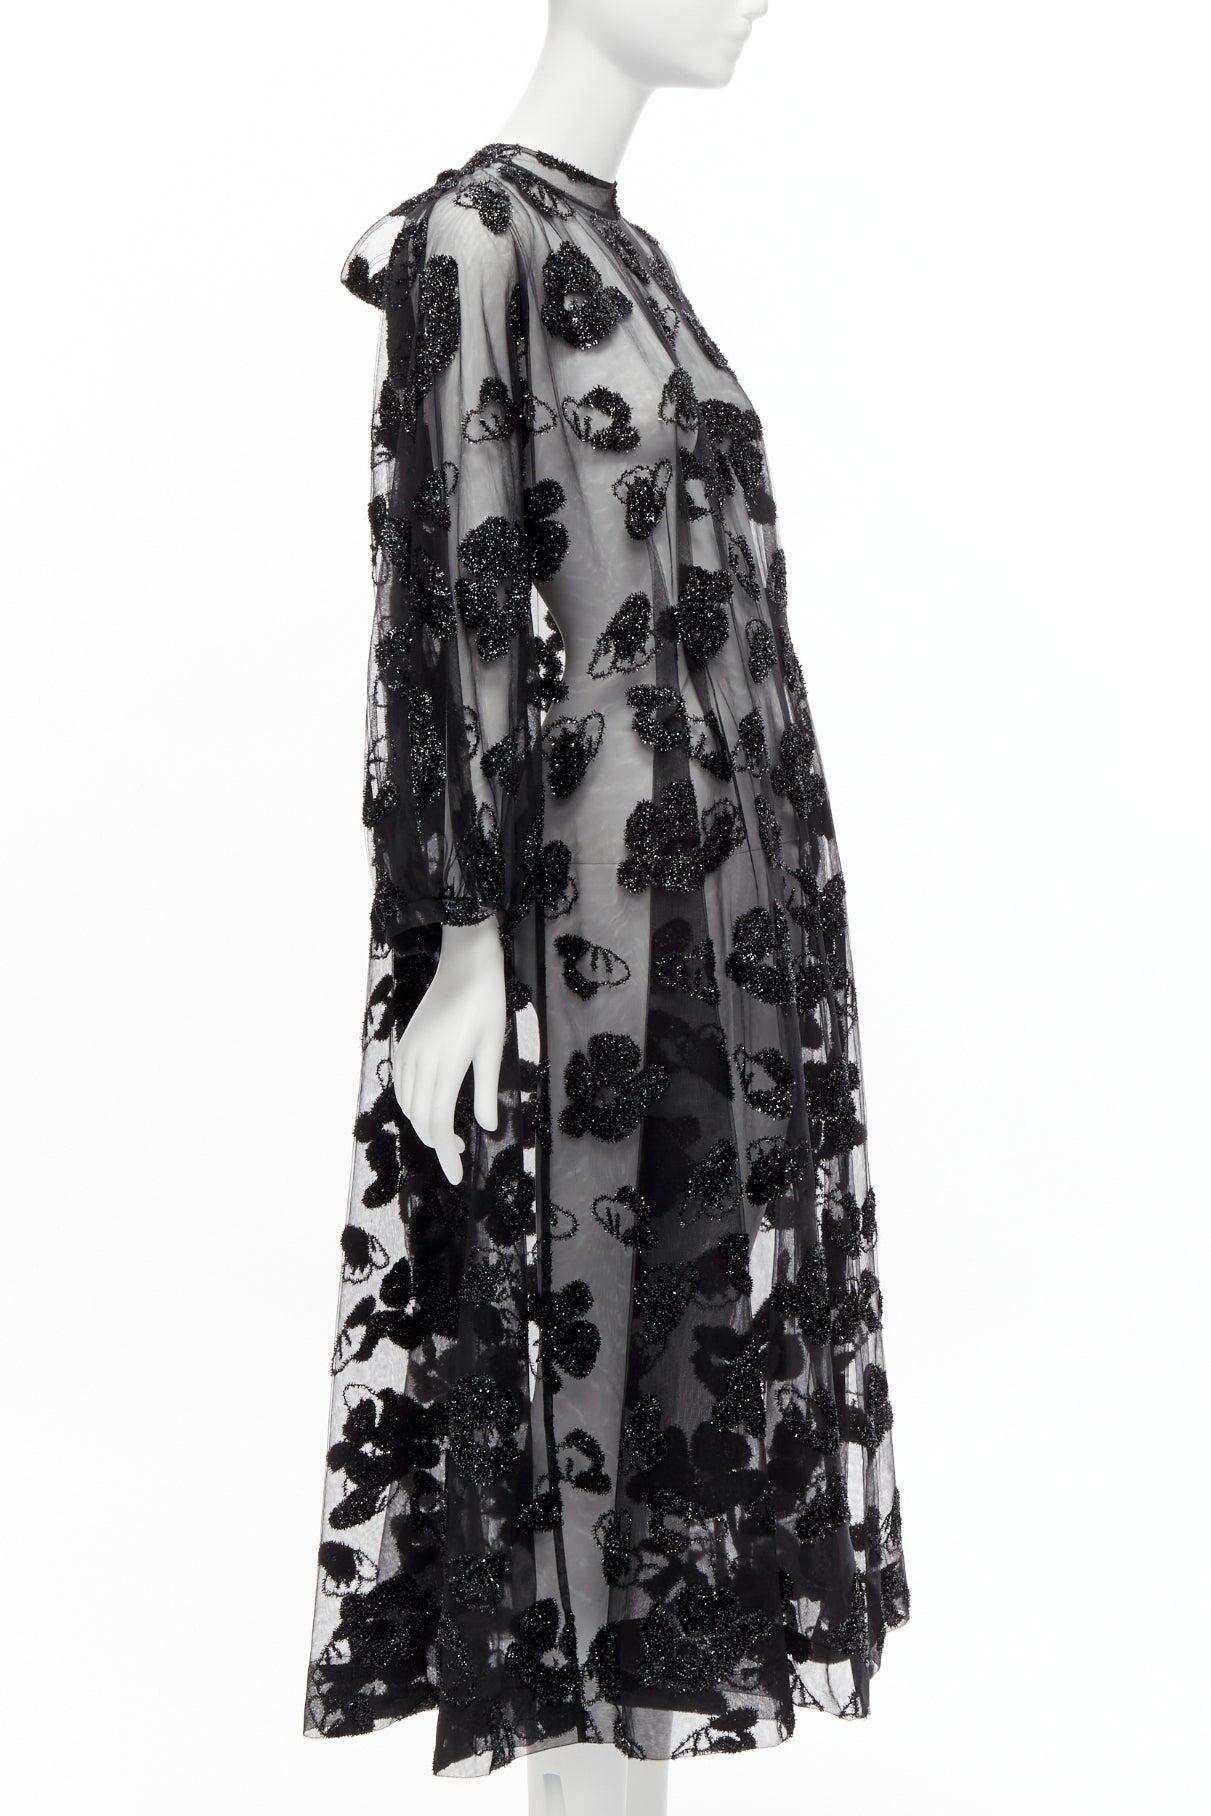 Women's new SIMONE ROCHA H&M tinsel floral embroidery sheer dolman midi dress UK6 XS